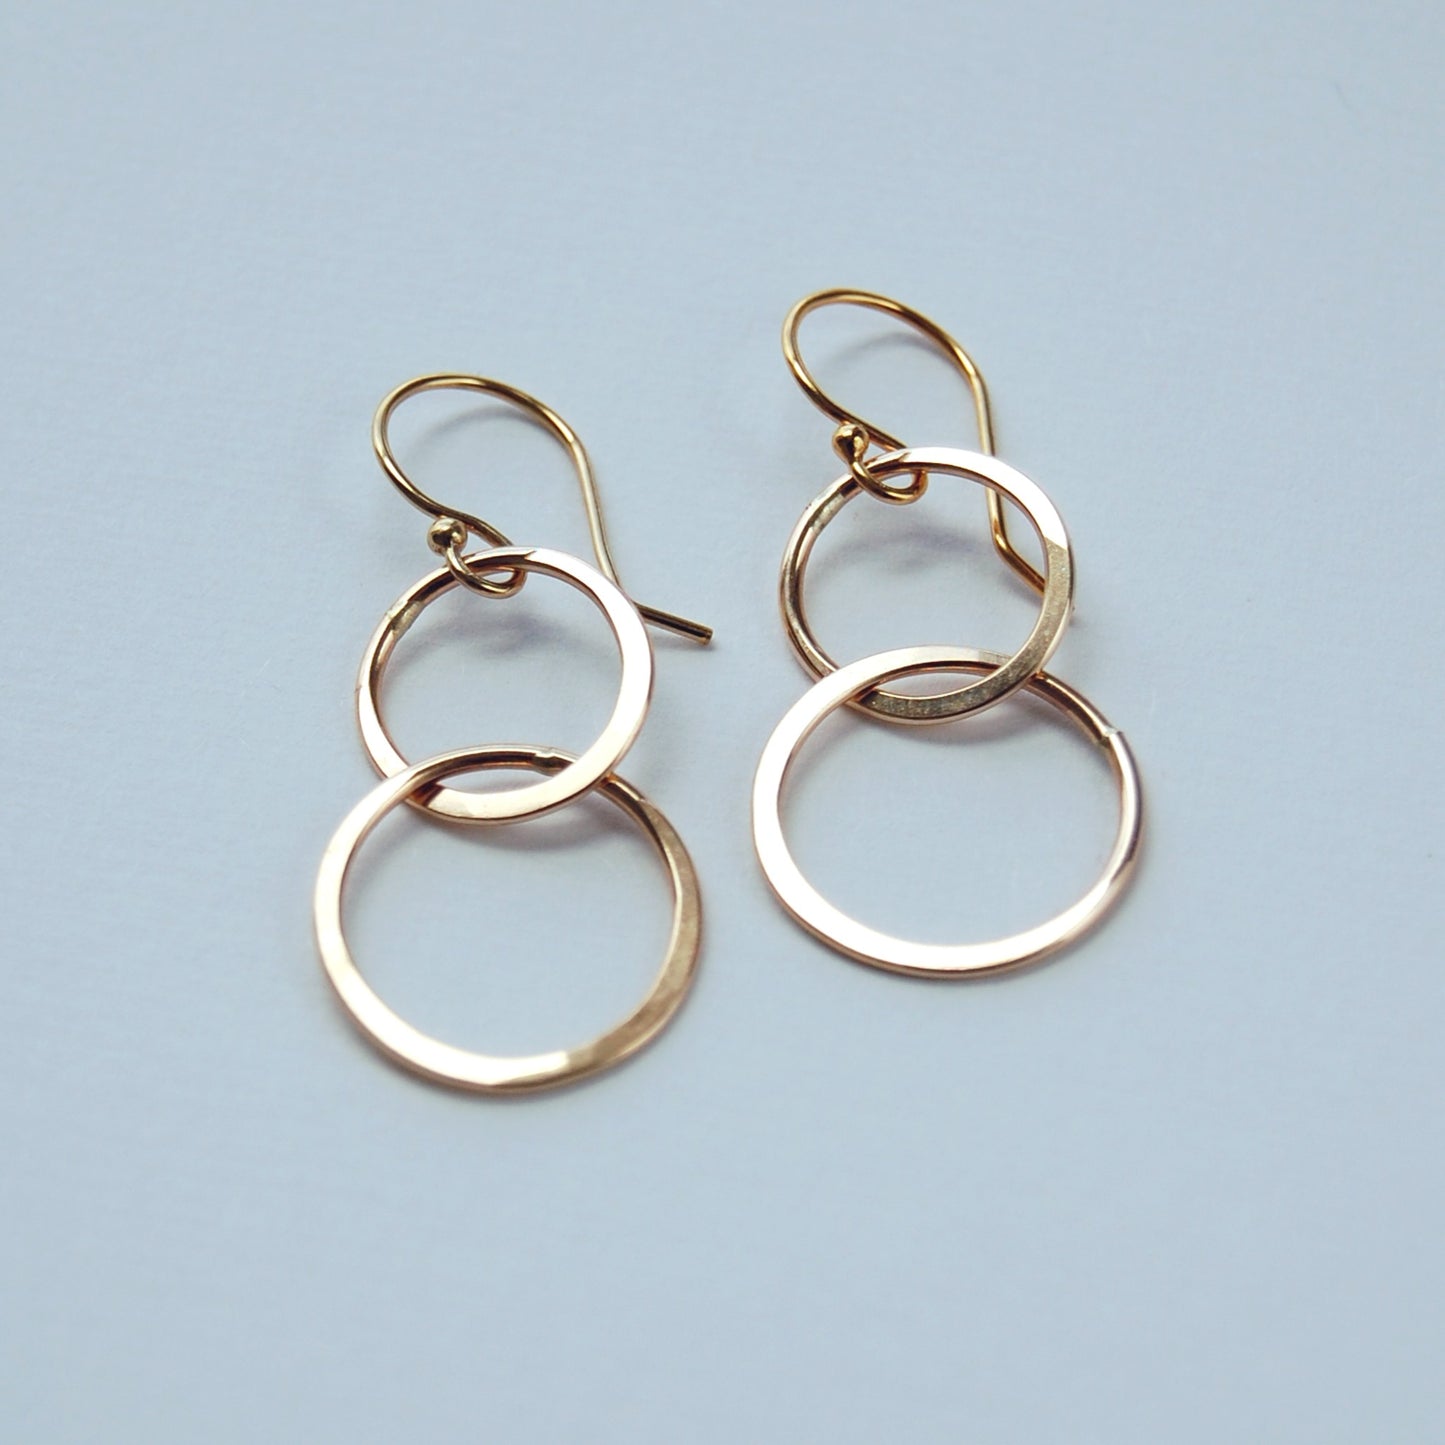 Double Linked Circle Earrings